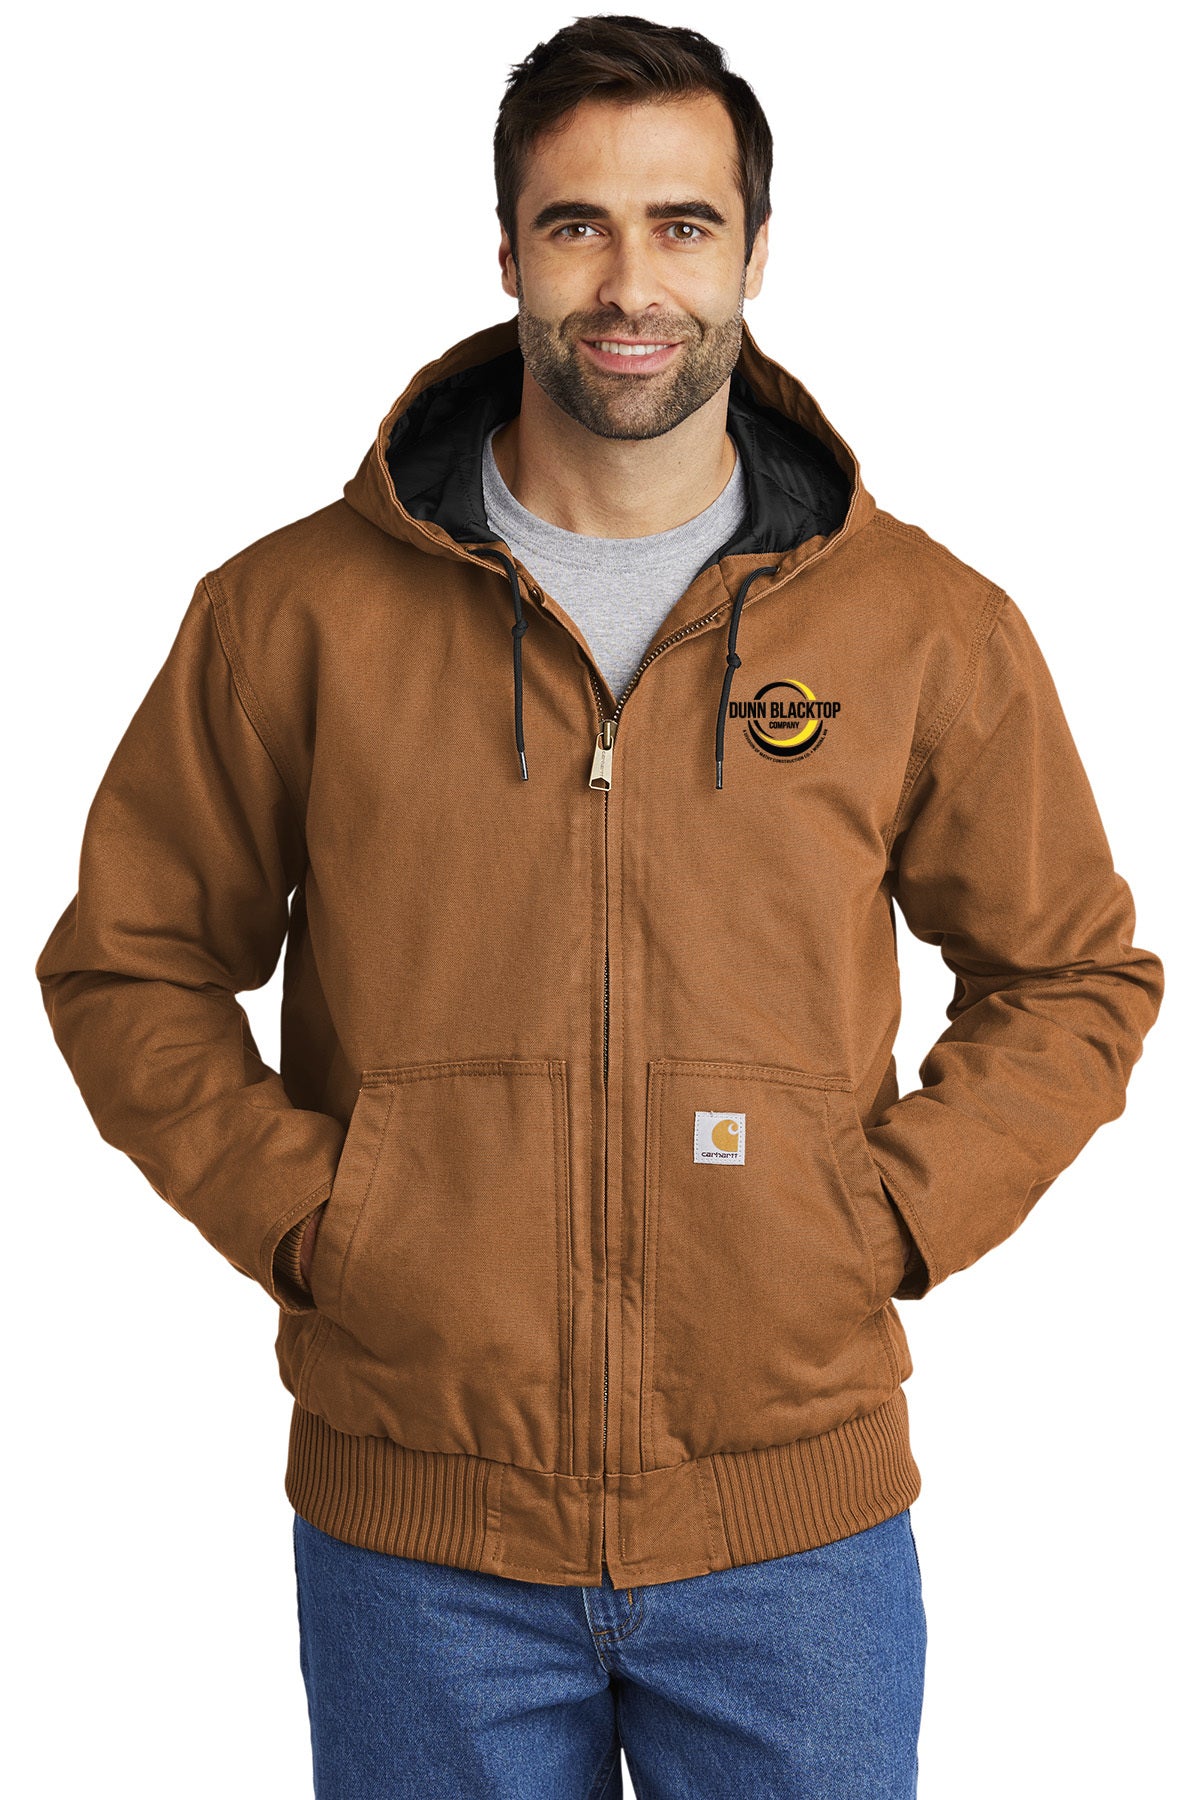 Dunn Blacktop Company Carhartt® Jacket